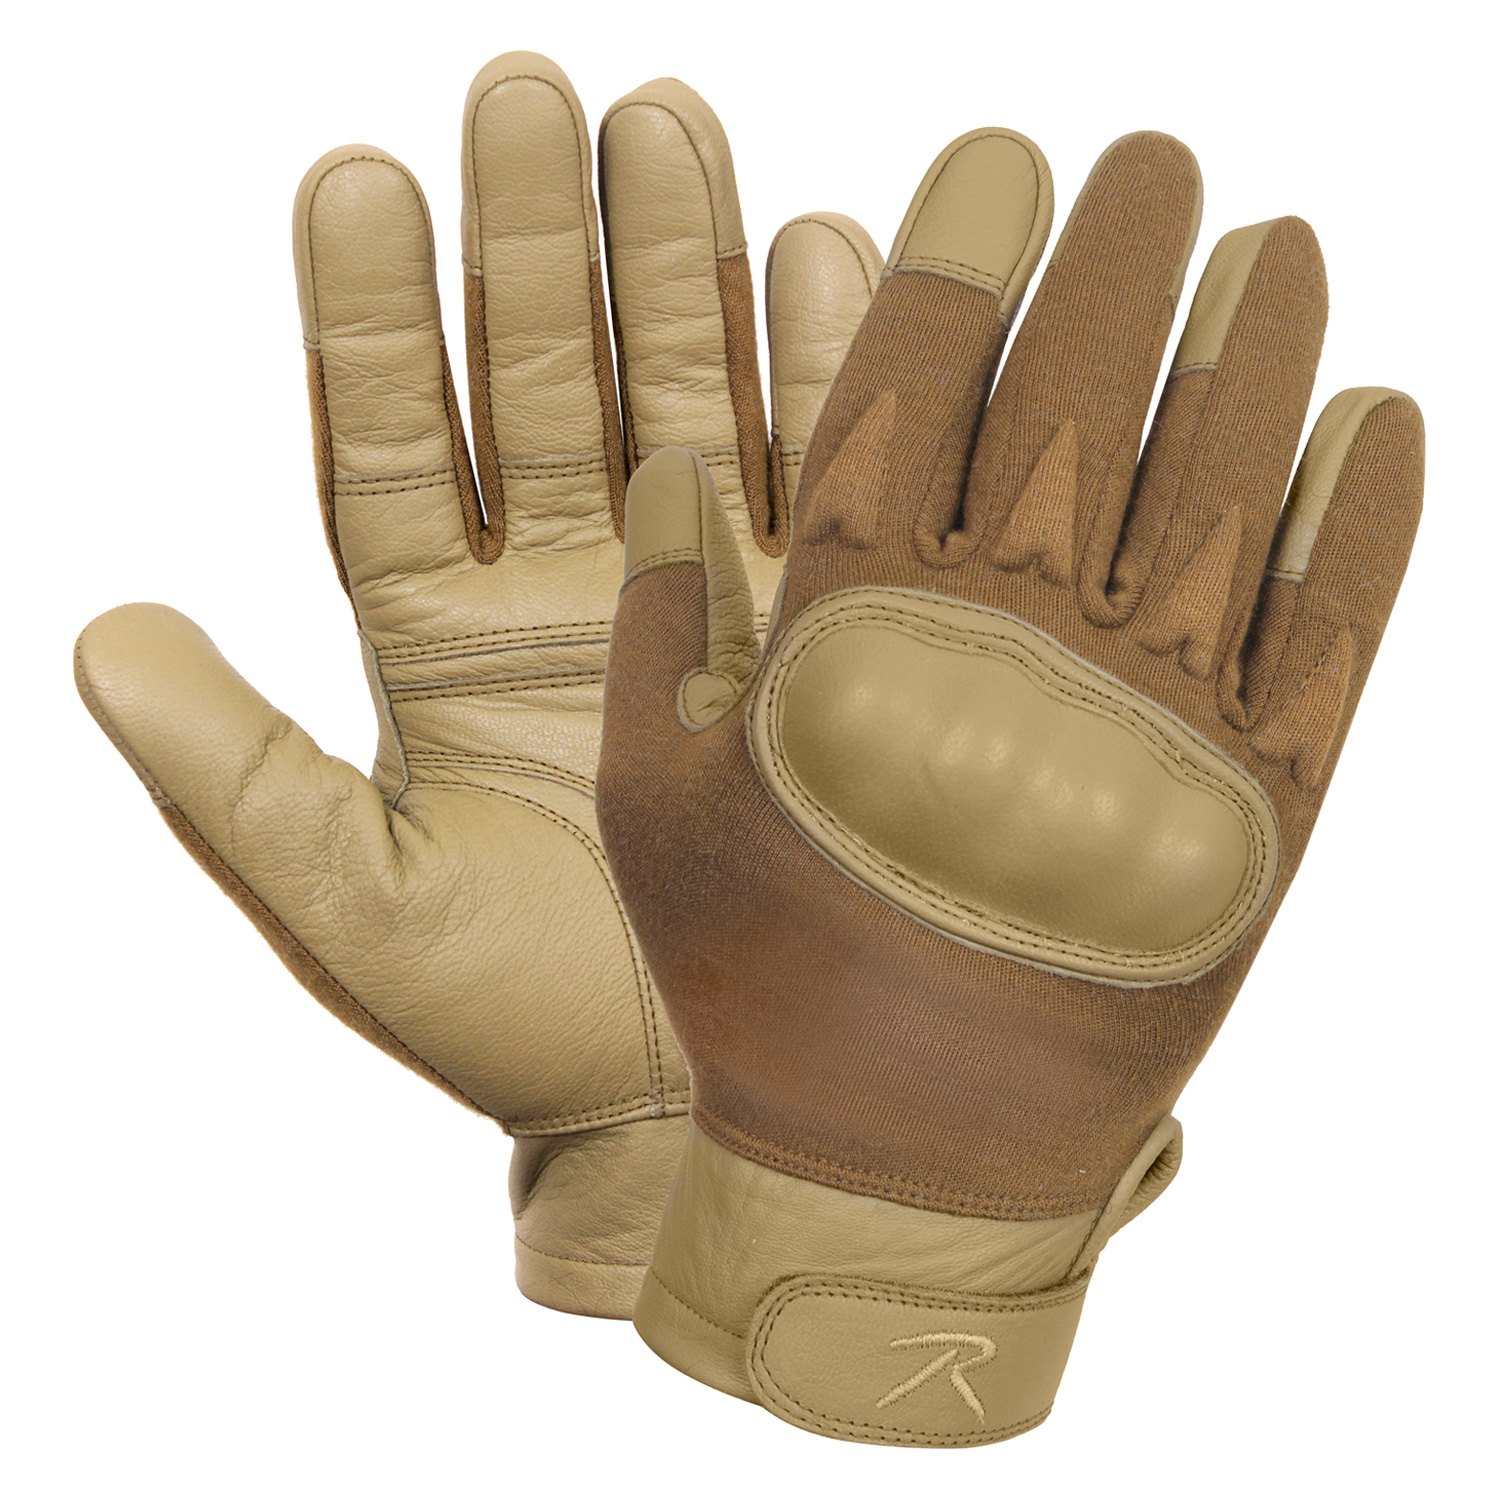 Fire-Resistant Gloves or Work Gloves